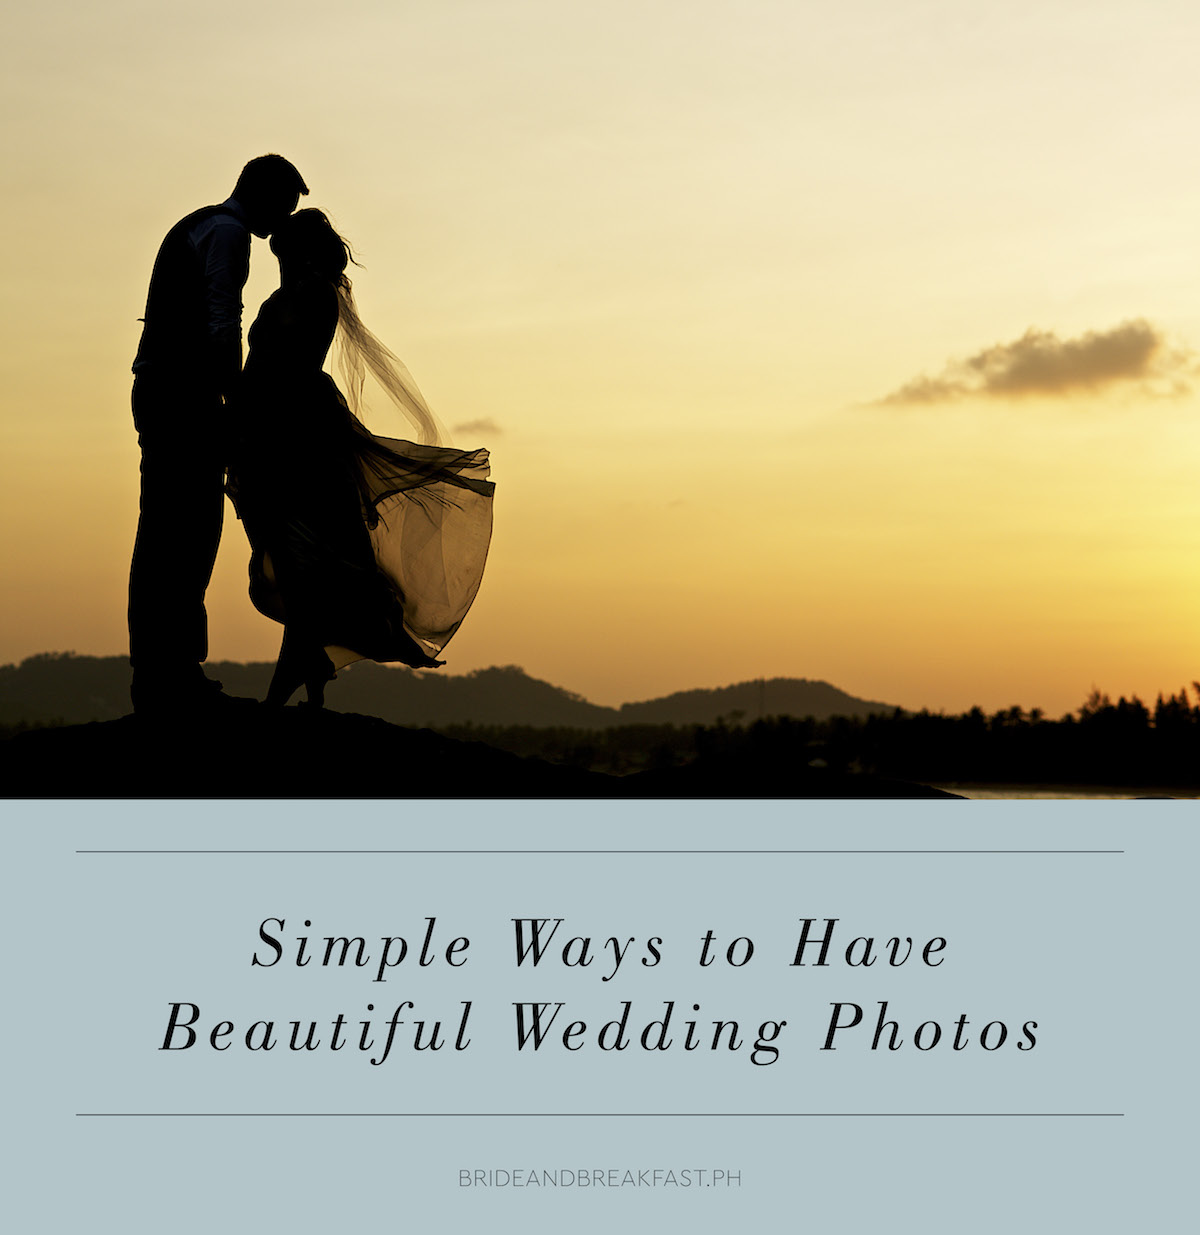 Simple Ways to Have Beautiful Wedding Photos